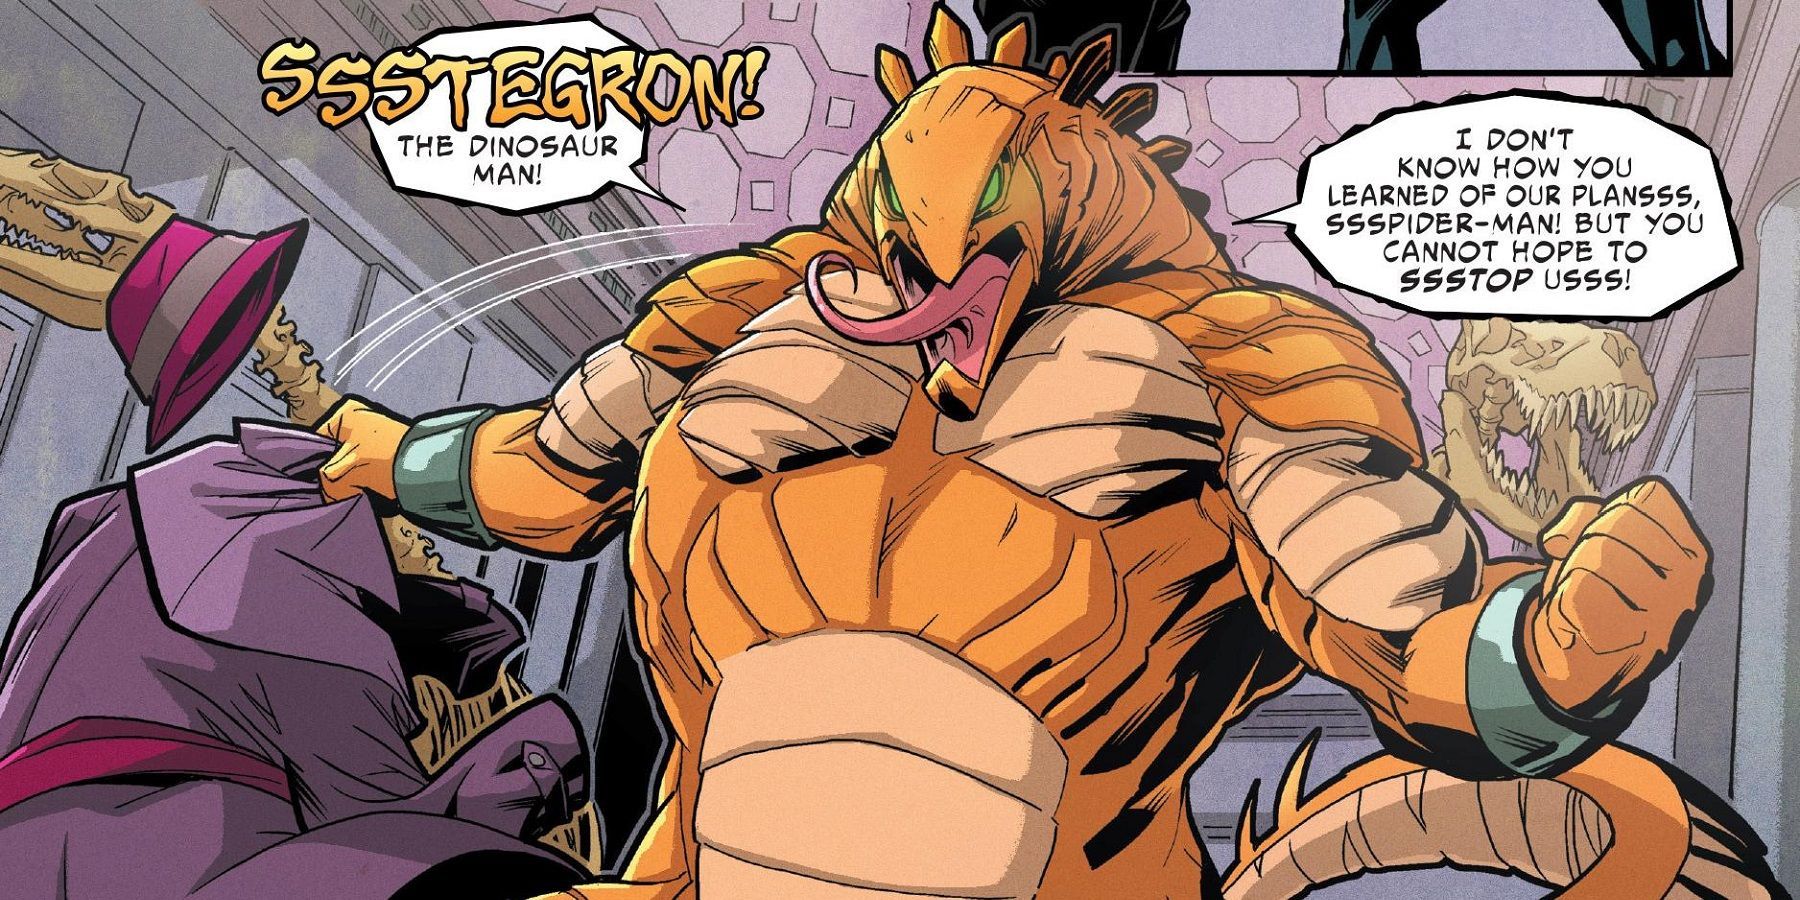 Stegron The Dinosaur Man attacks in Marvel Comics.